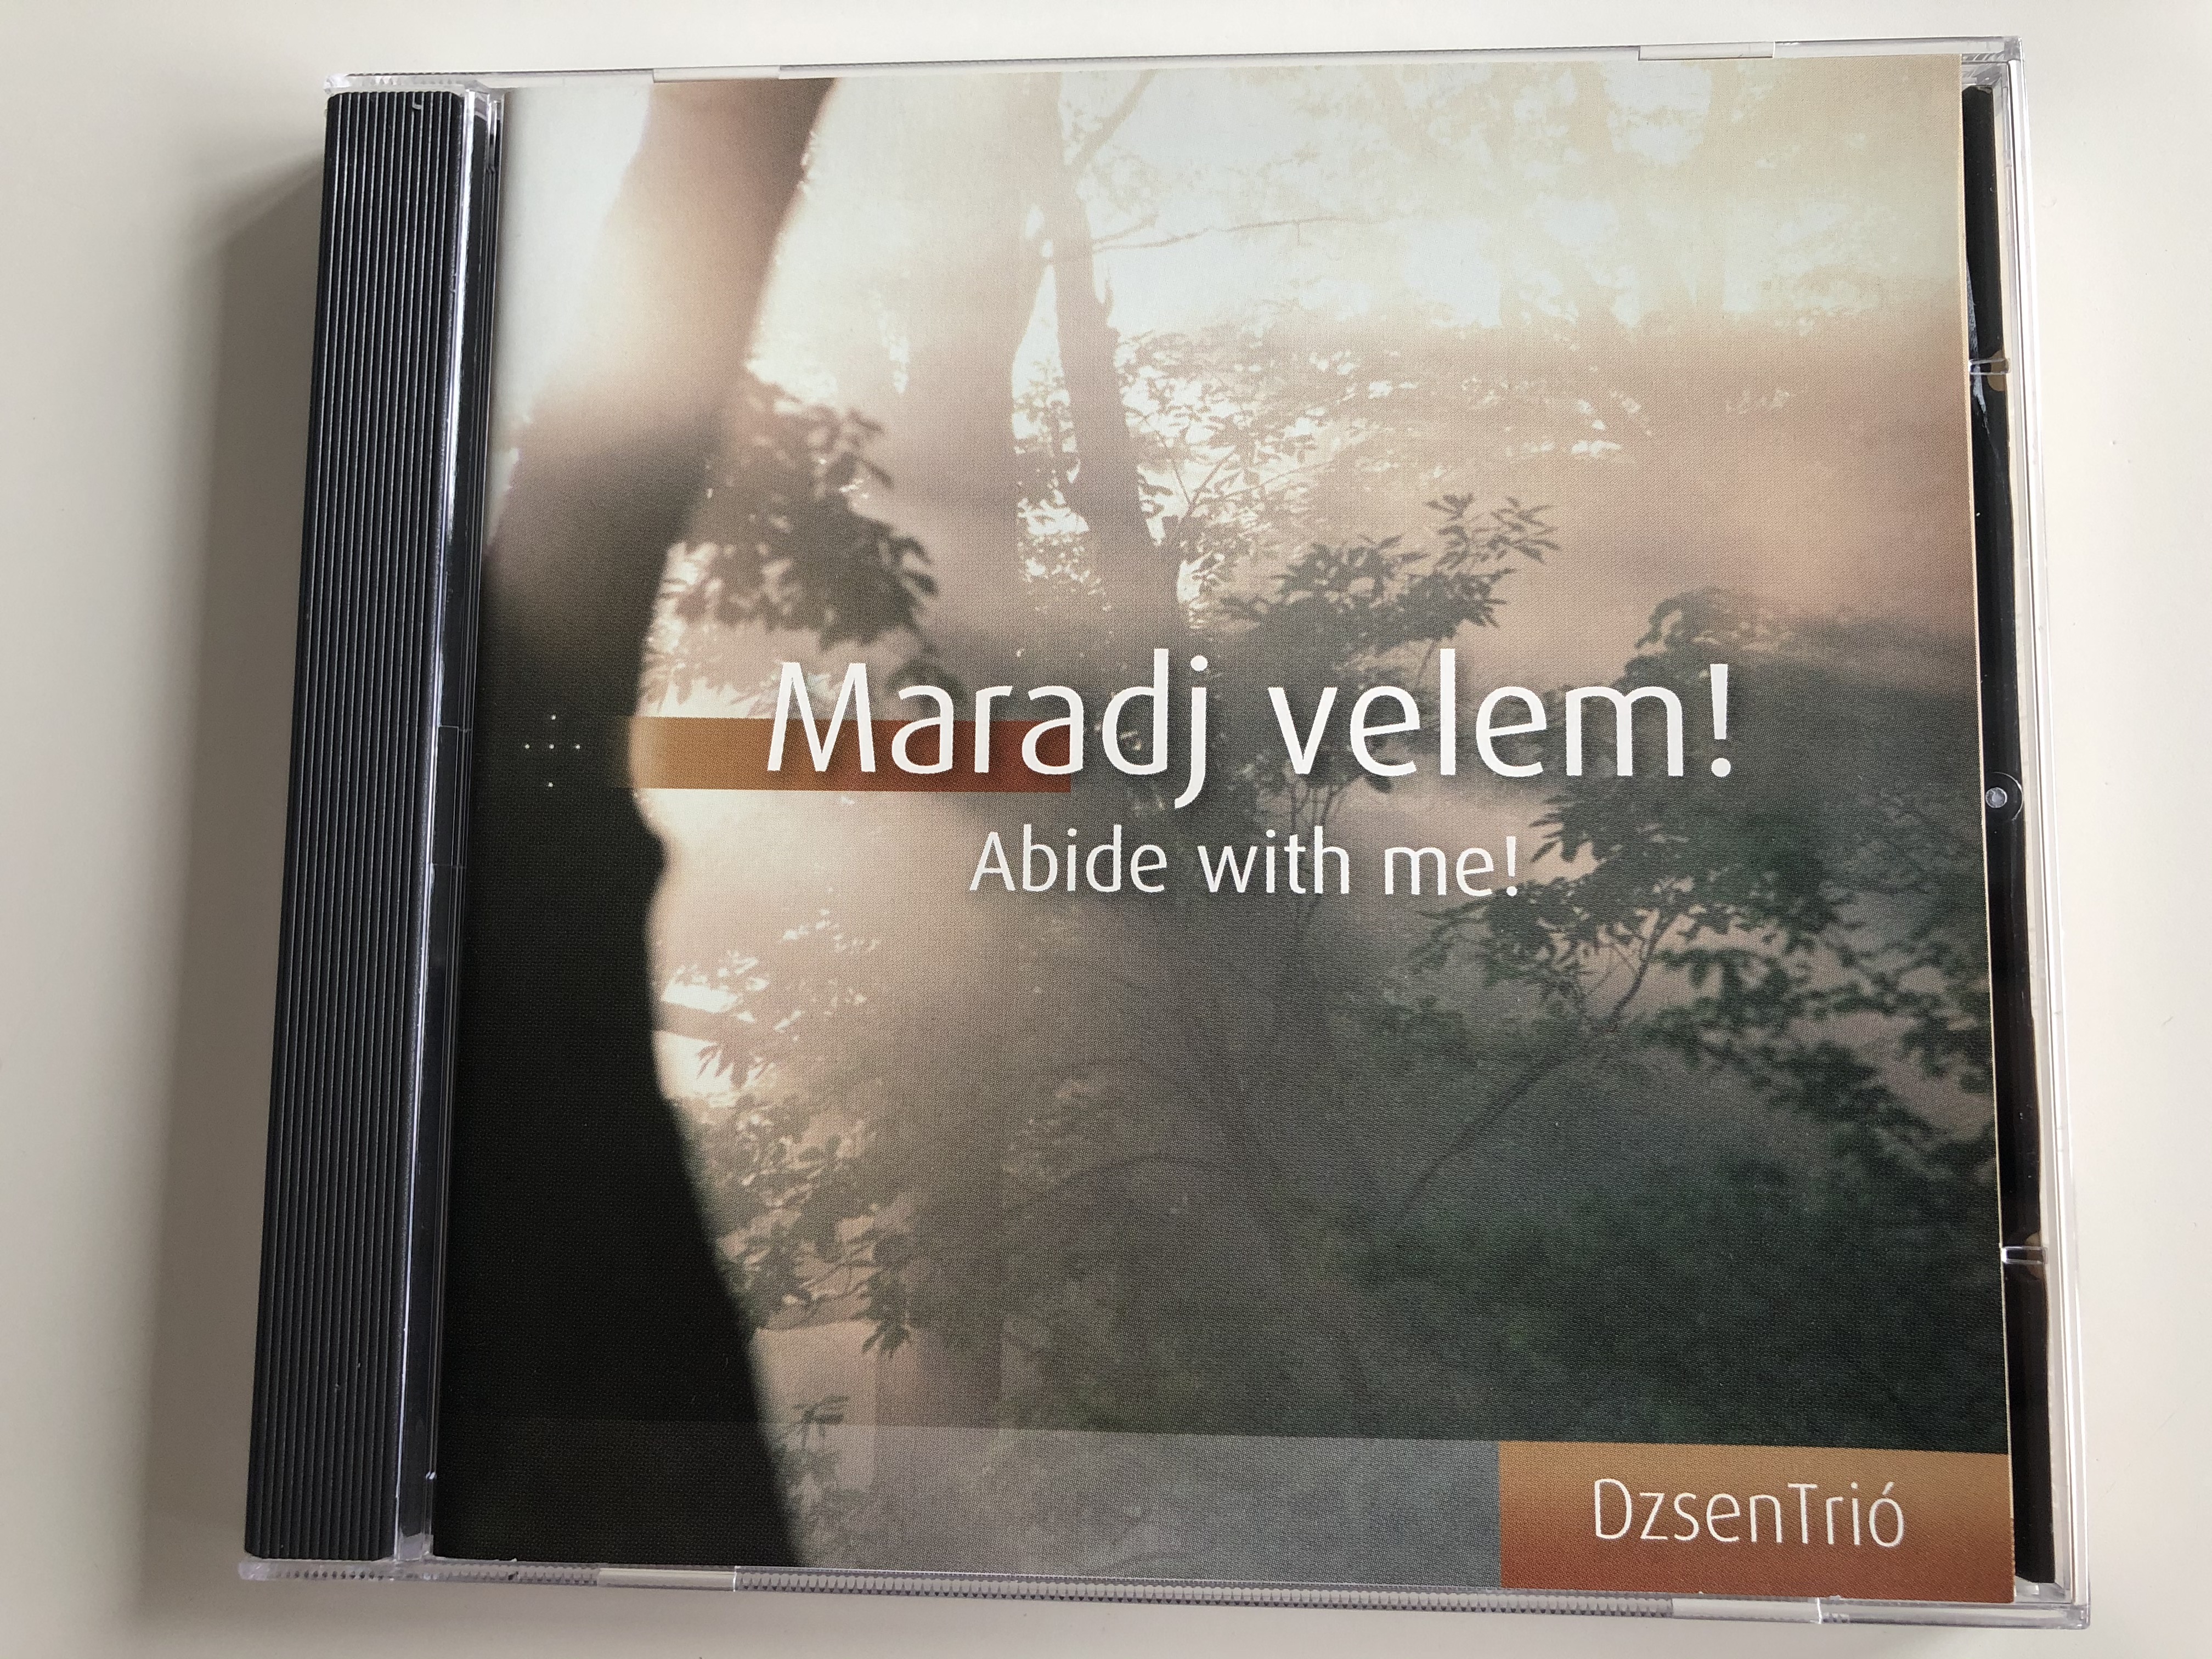 maradj-velem-abide-with-me-dzsentrio-audio-cd-2011-metcd-02-1-.jpg